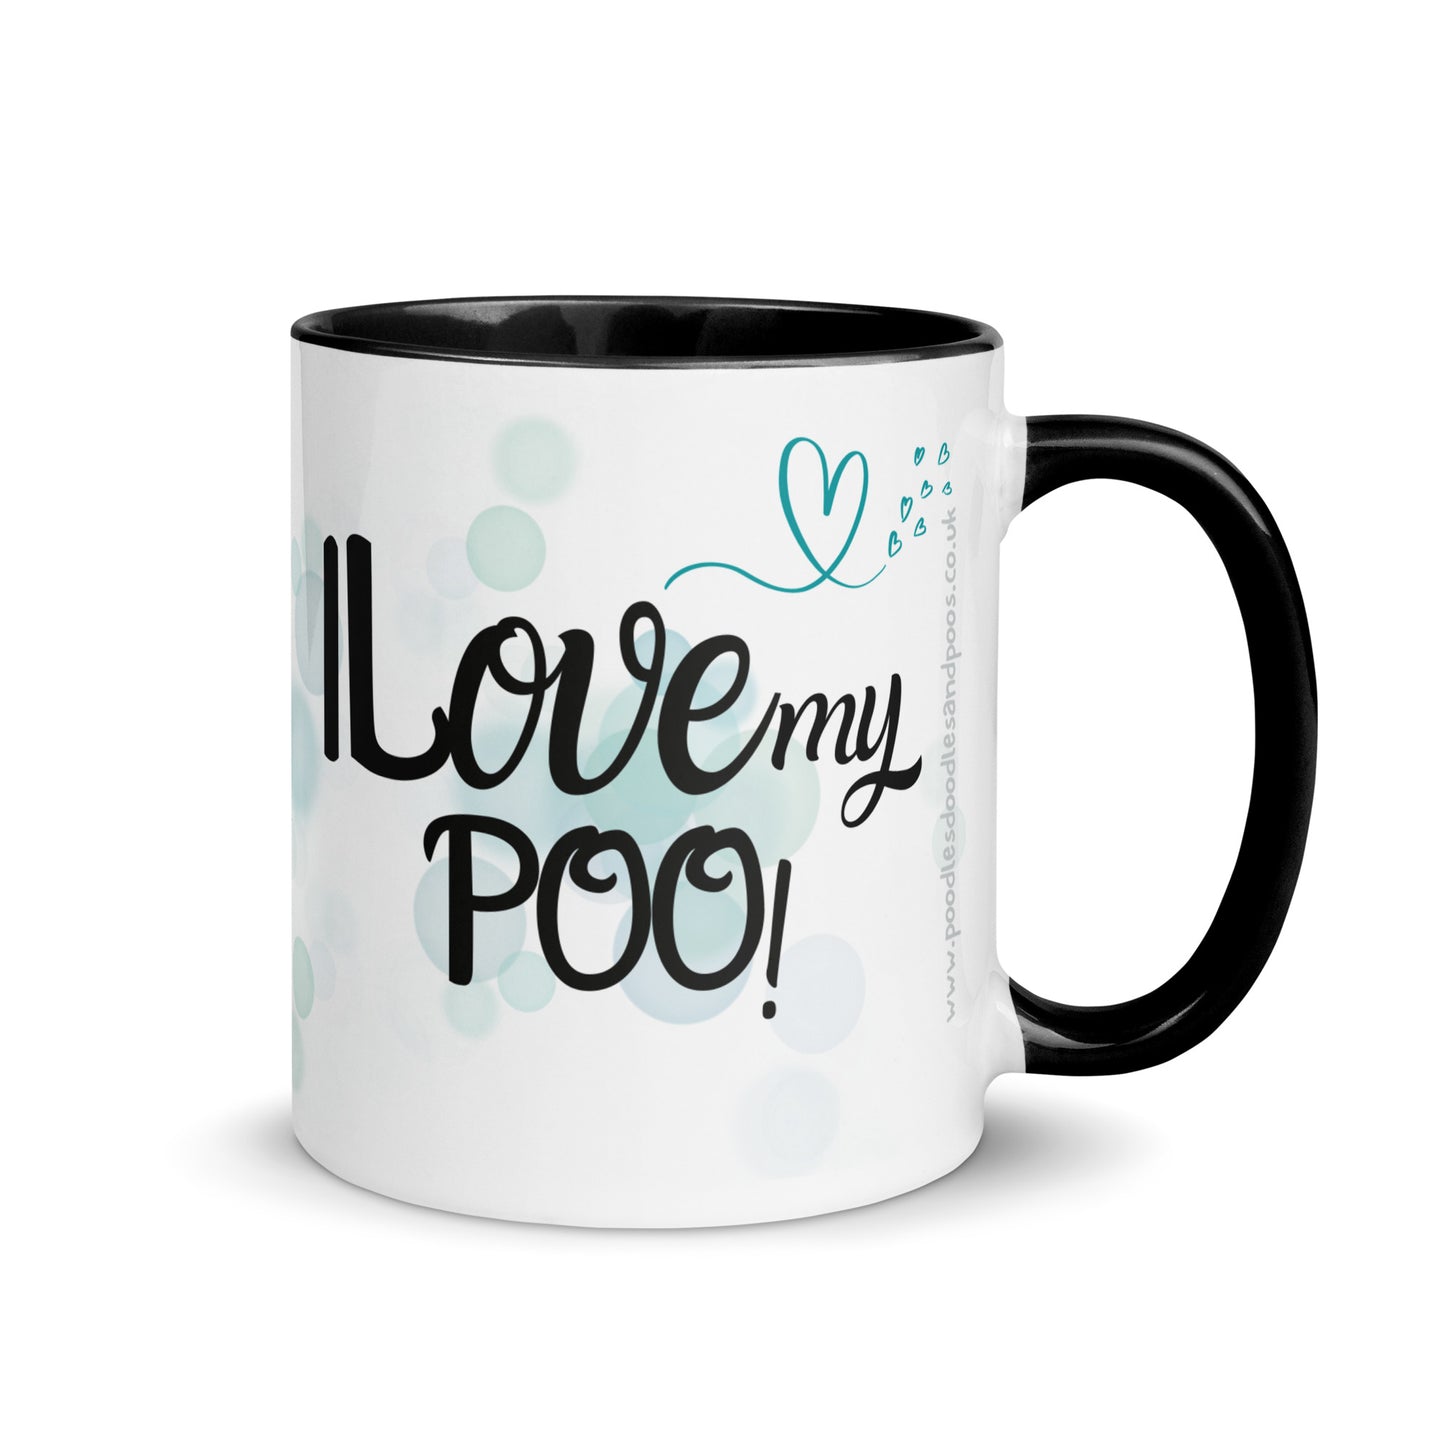 "I Love my..." mug with black Inside - black Cockapoo